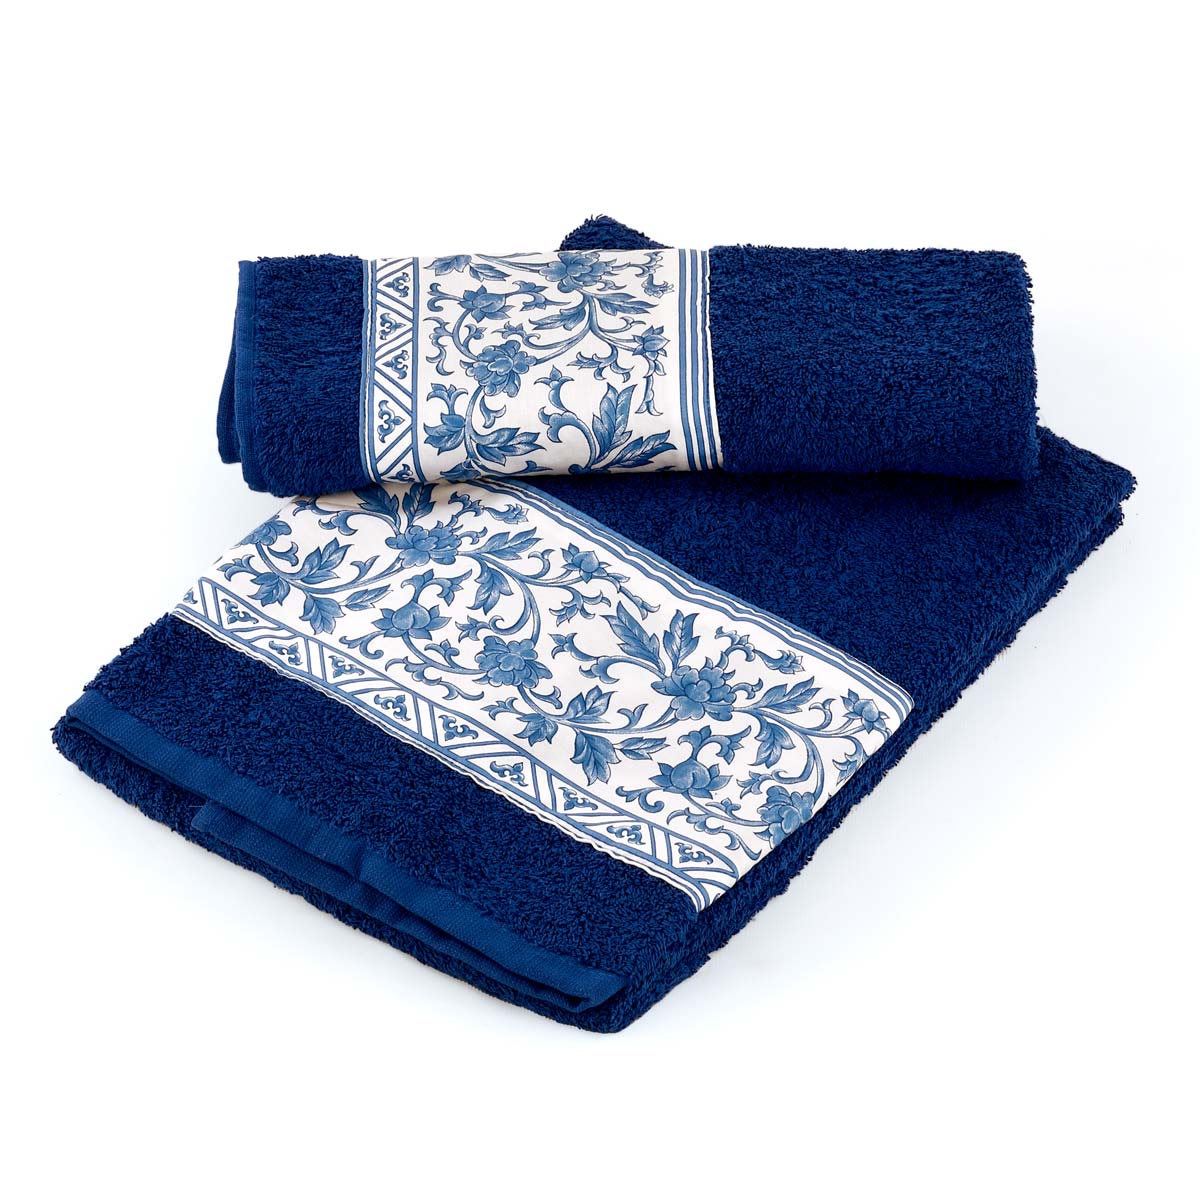 Coppia asciugamani bagno in spugna di colore blu e balza in raso a fiori